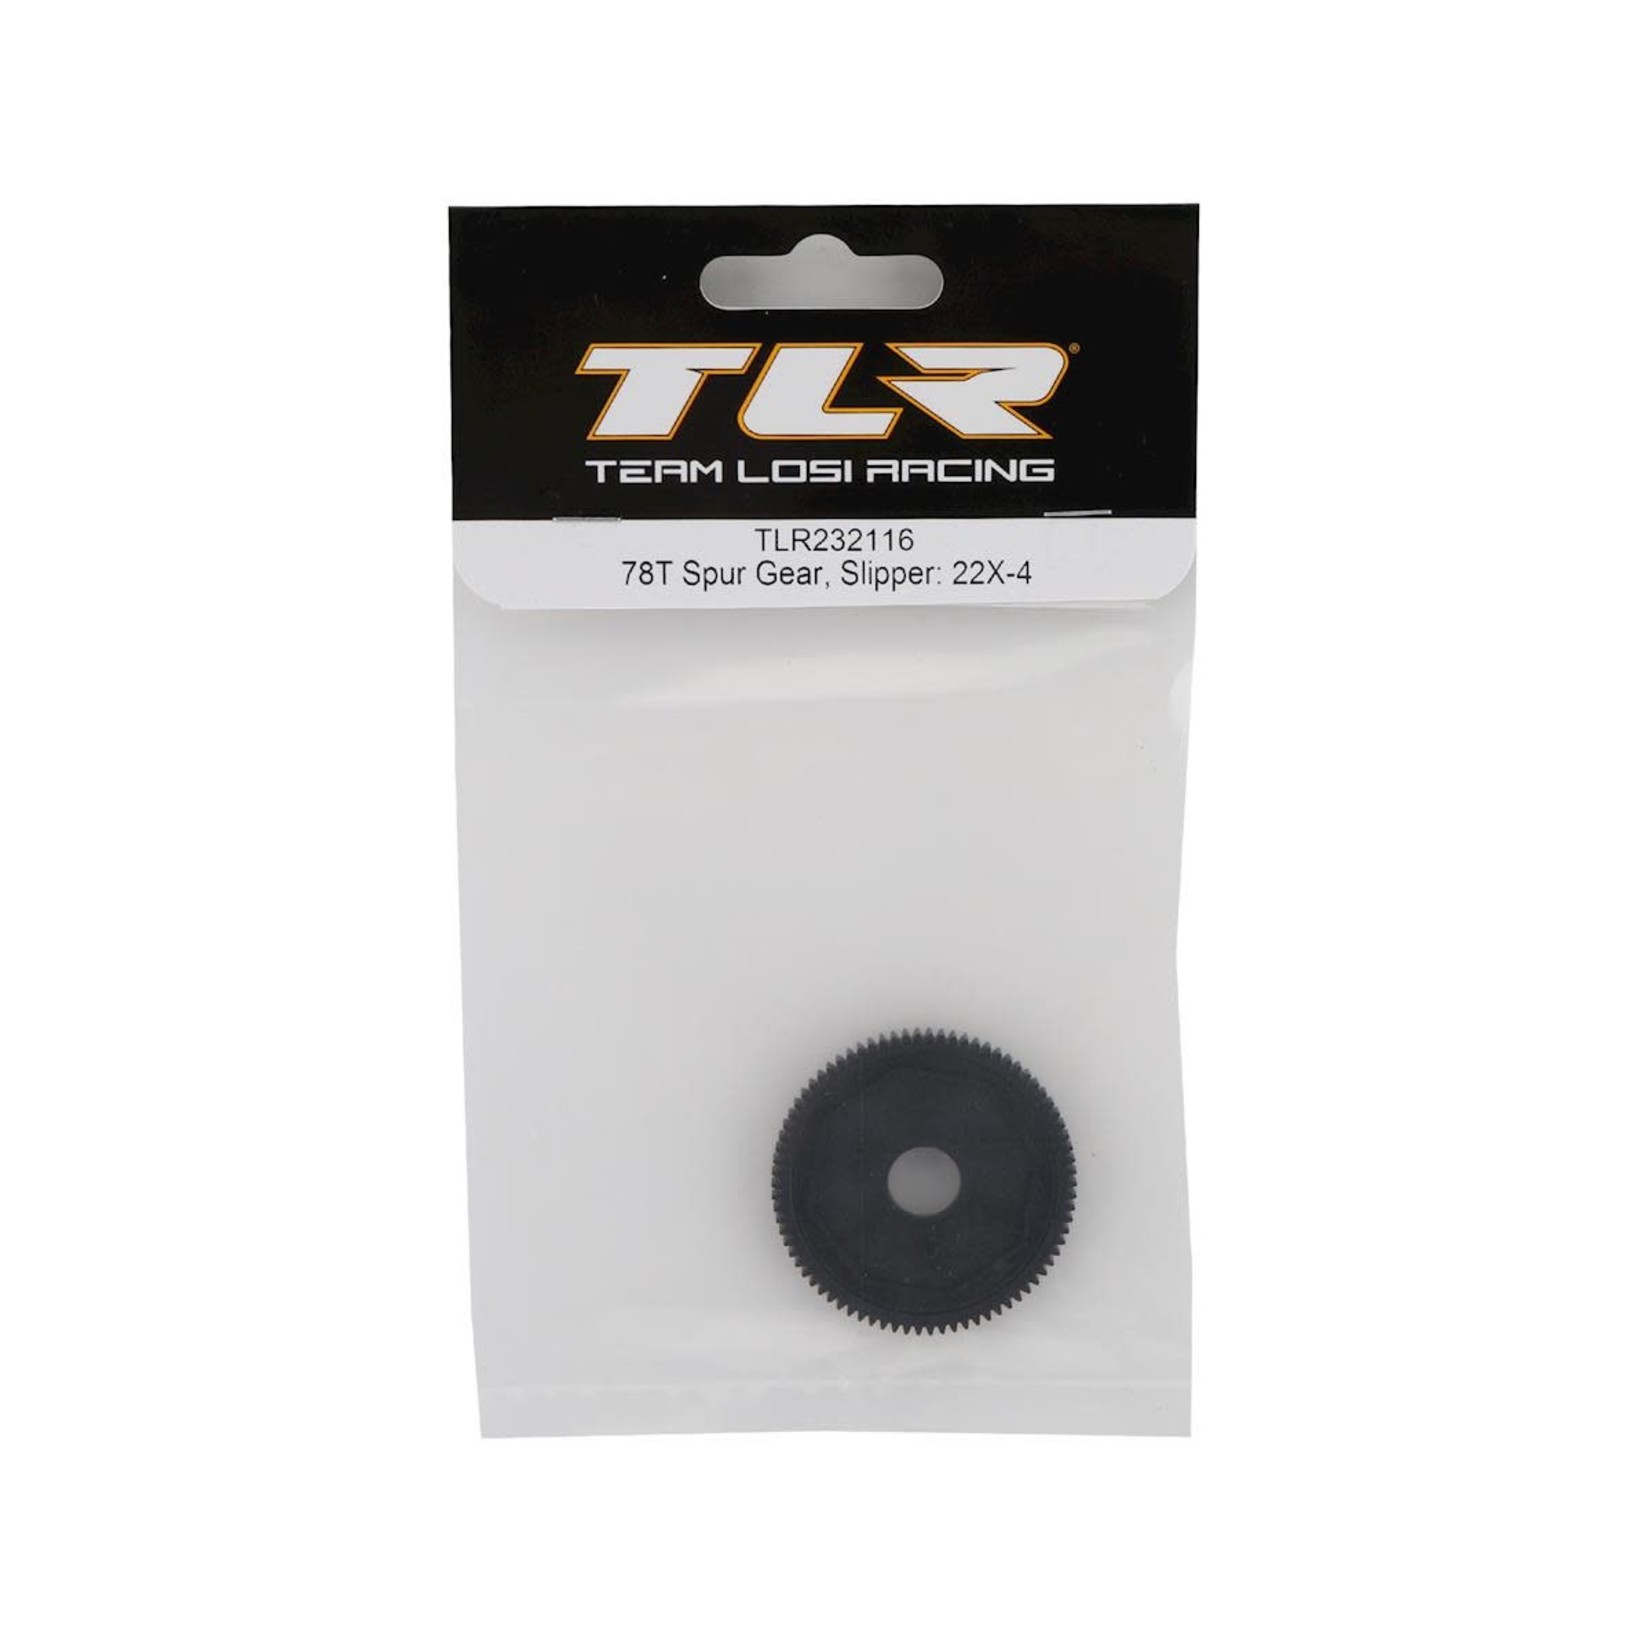 TLR Team Losi Racing 22X-4 Slipper Spur Gear (78T) #TLR232116